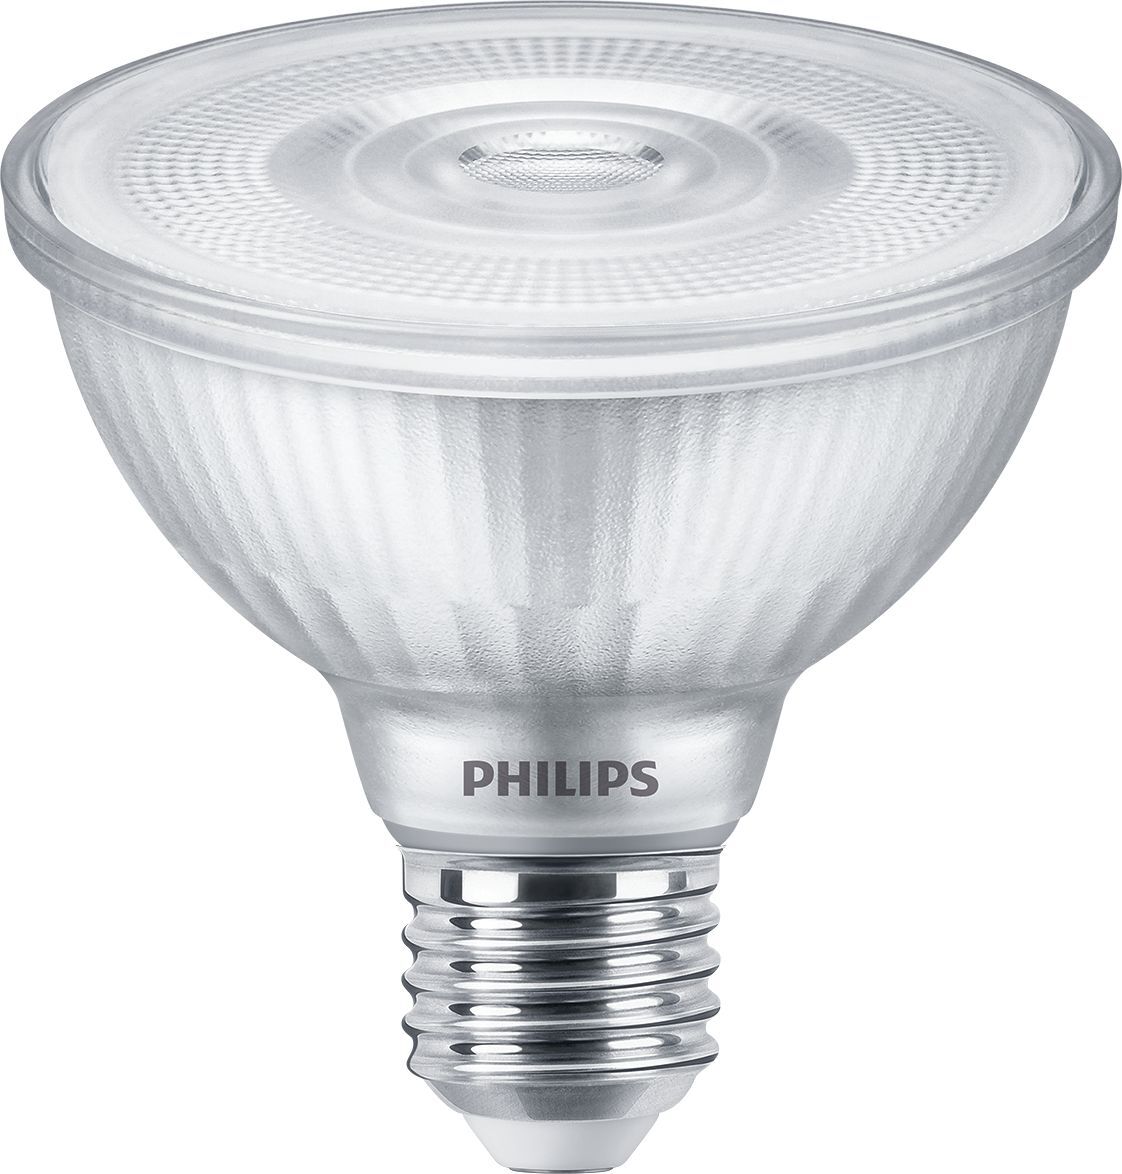 Philips Reflectorlamp (dimbaar)